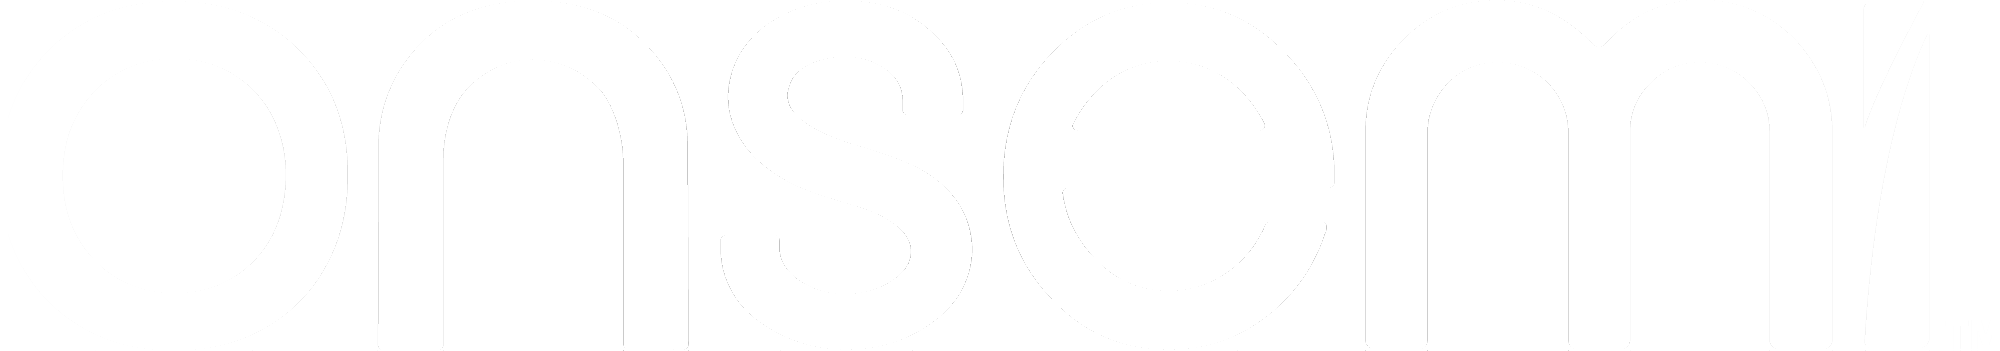 Onsemi logo in white